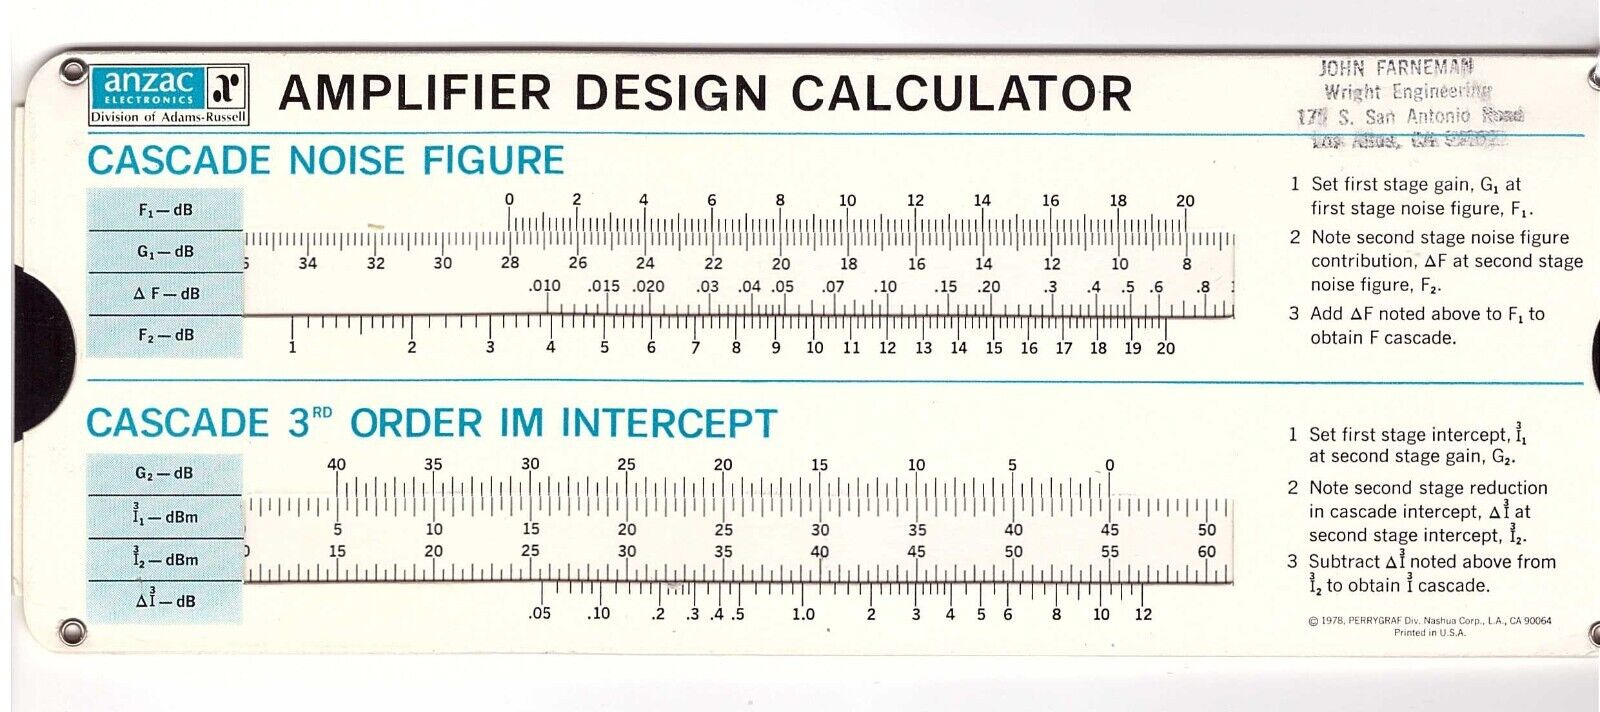 Anzac AMPLIFIER DESIGN CALCULATOR, slide rule, (S-1379)